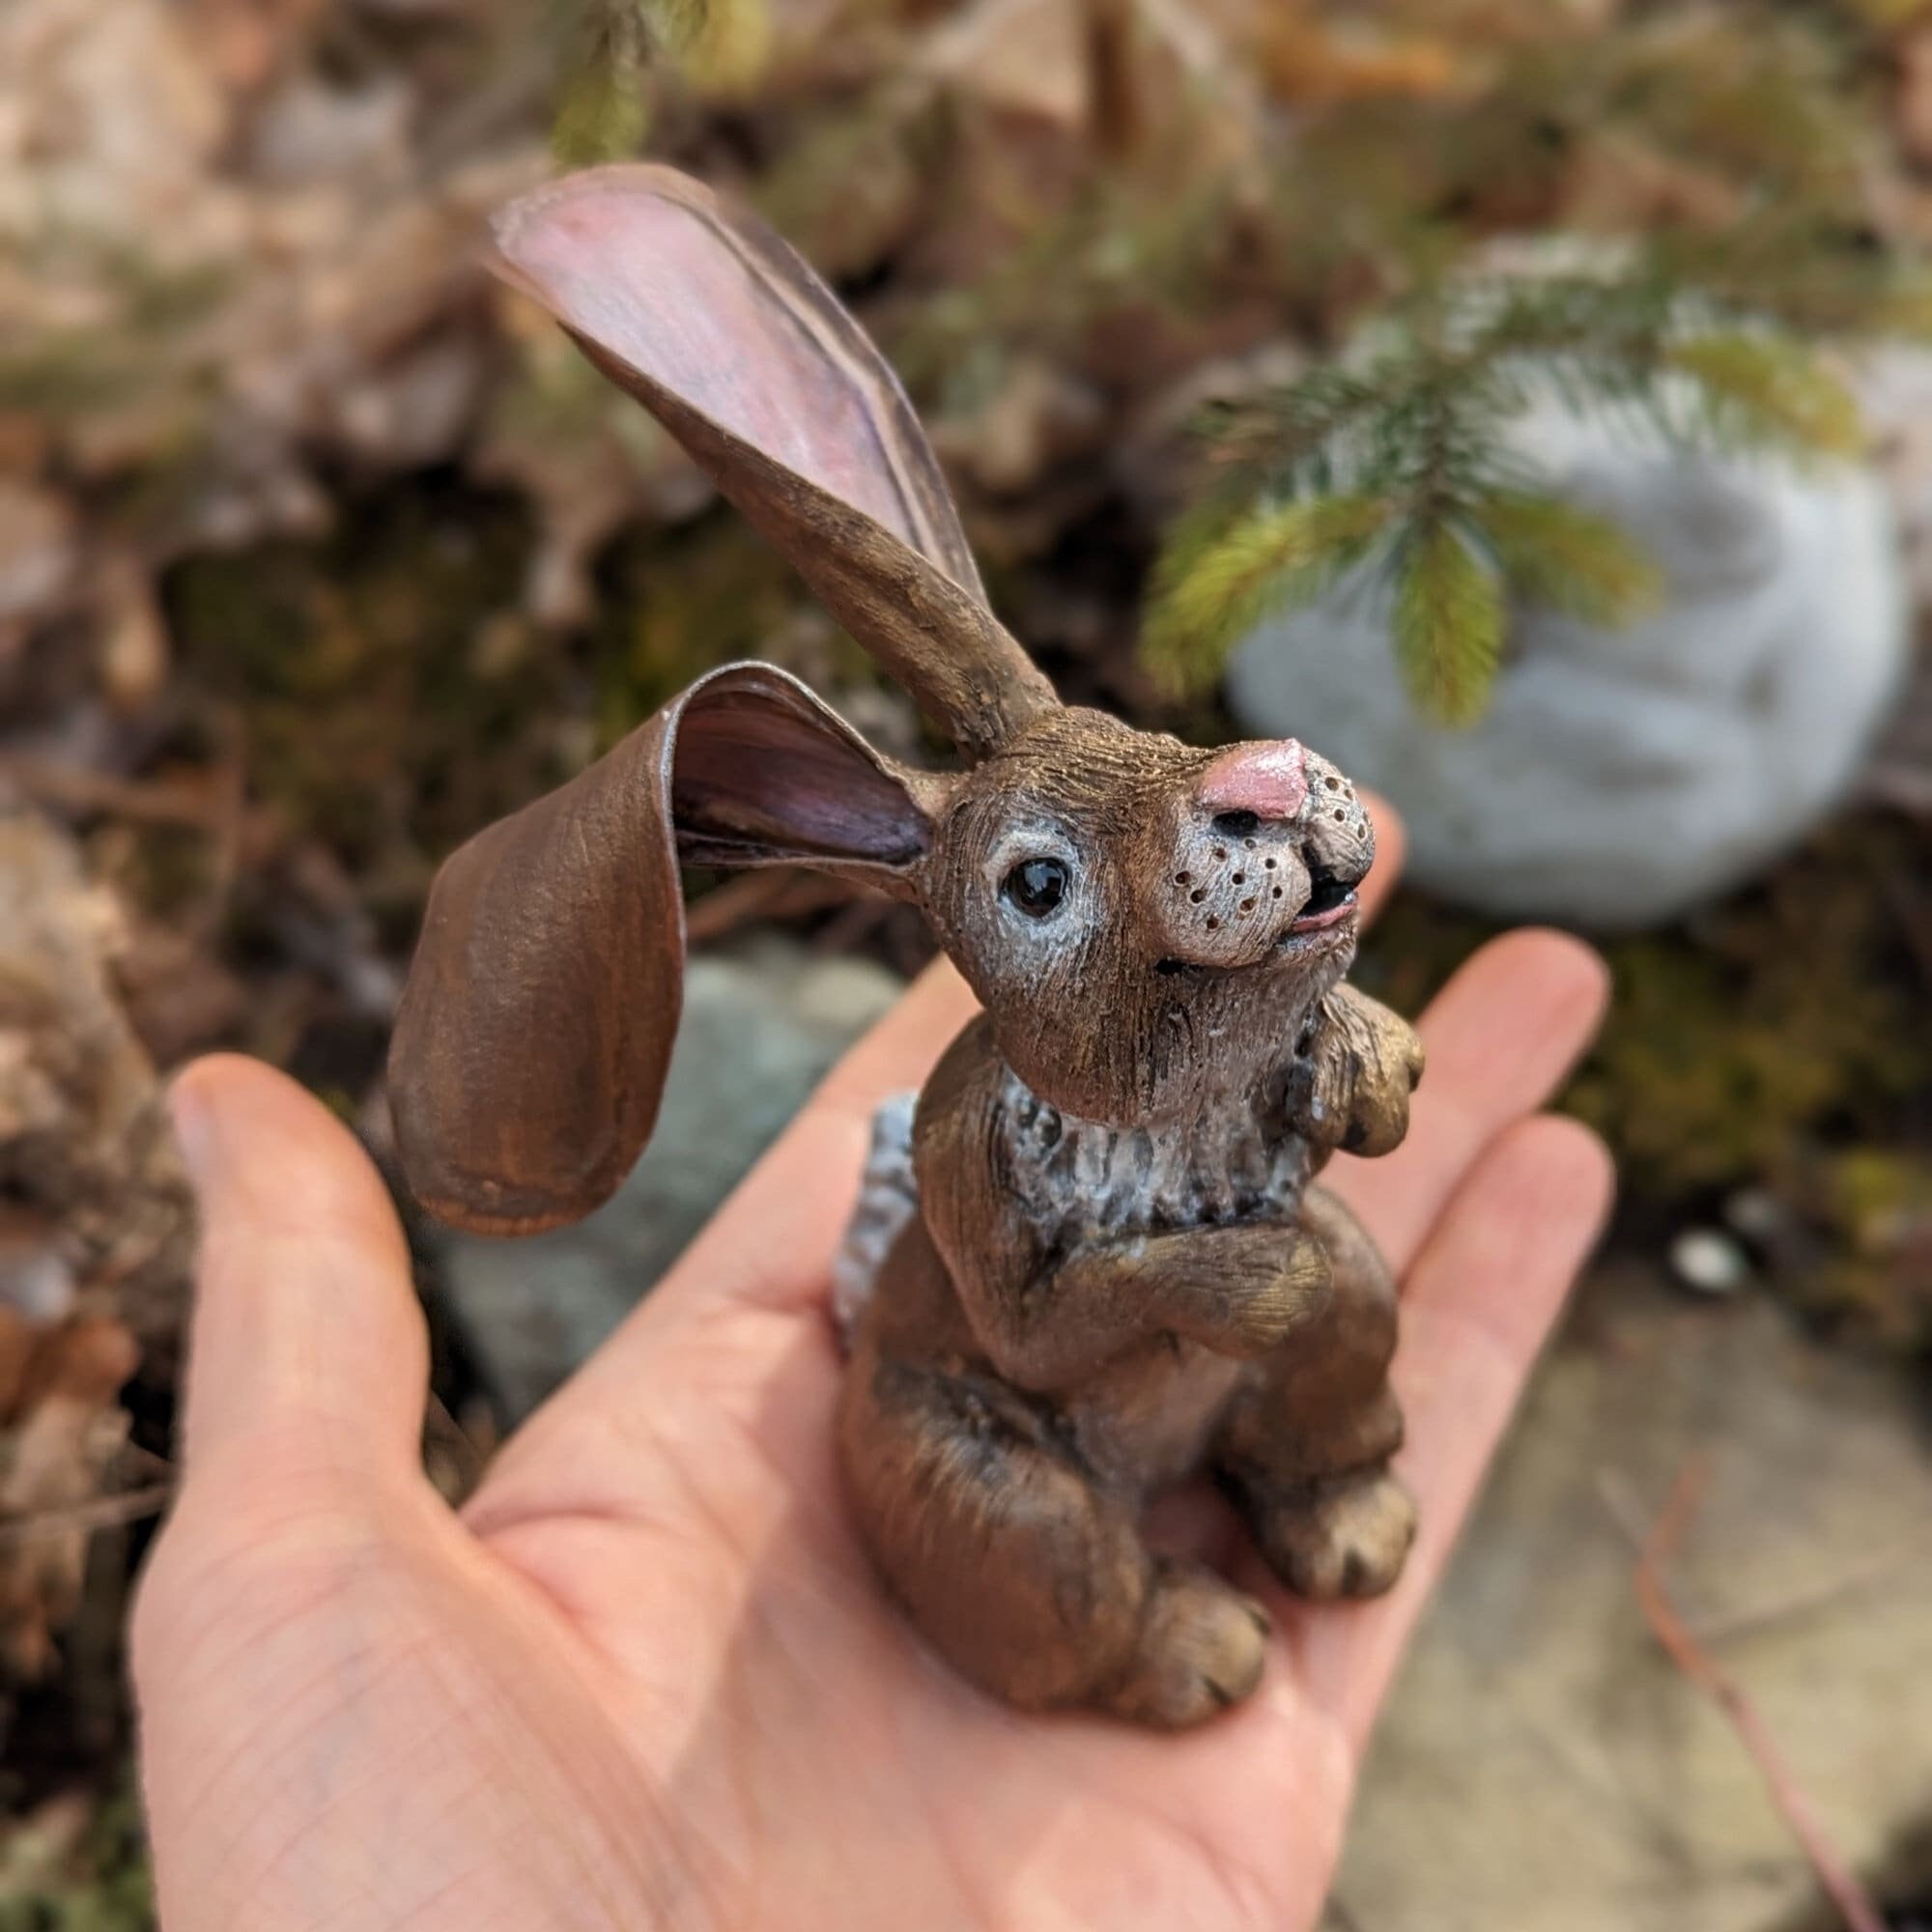 Bunny Figurines -  Canada